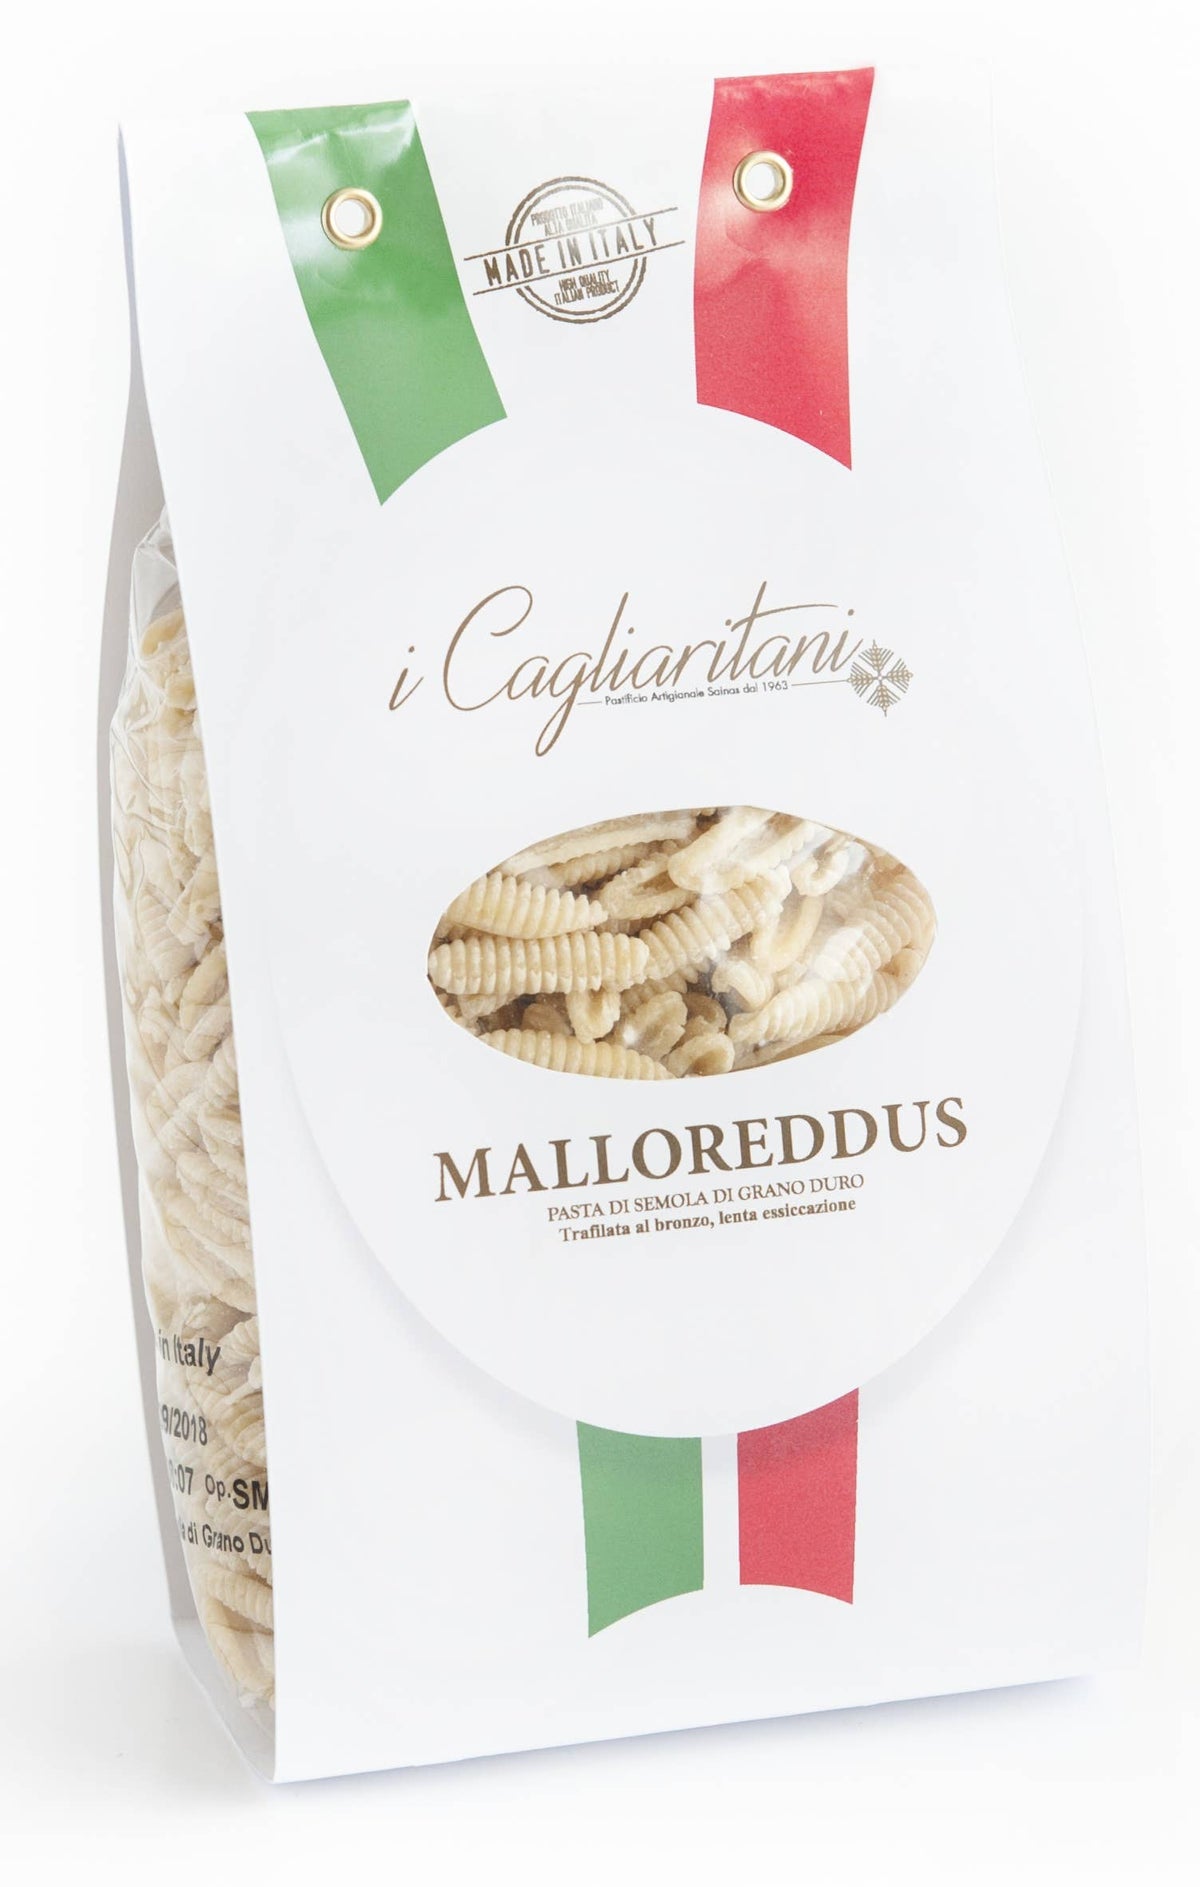 Season and Stir™ Traditional Malloreddus - The Italian!